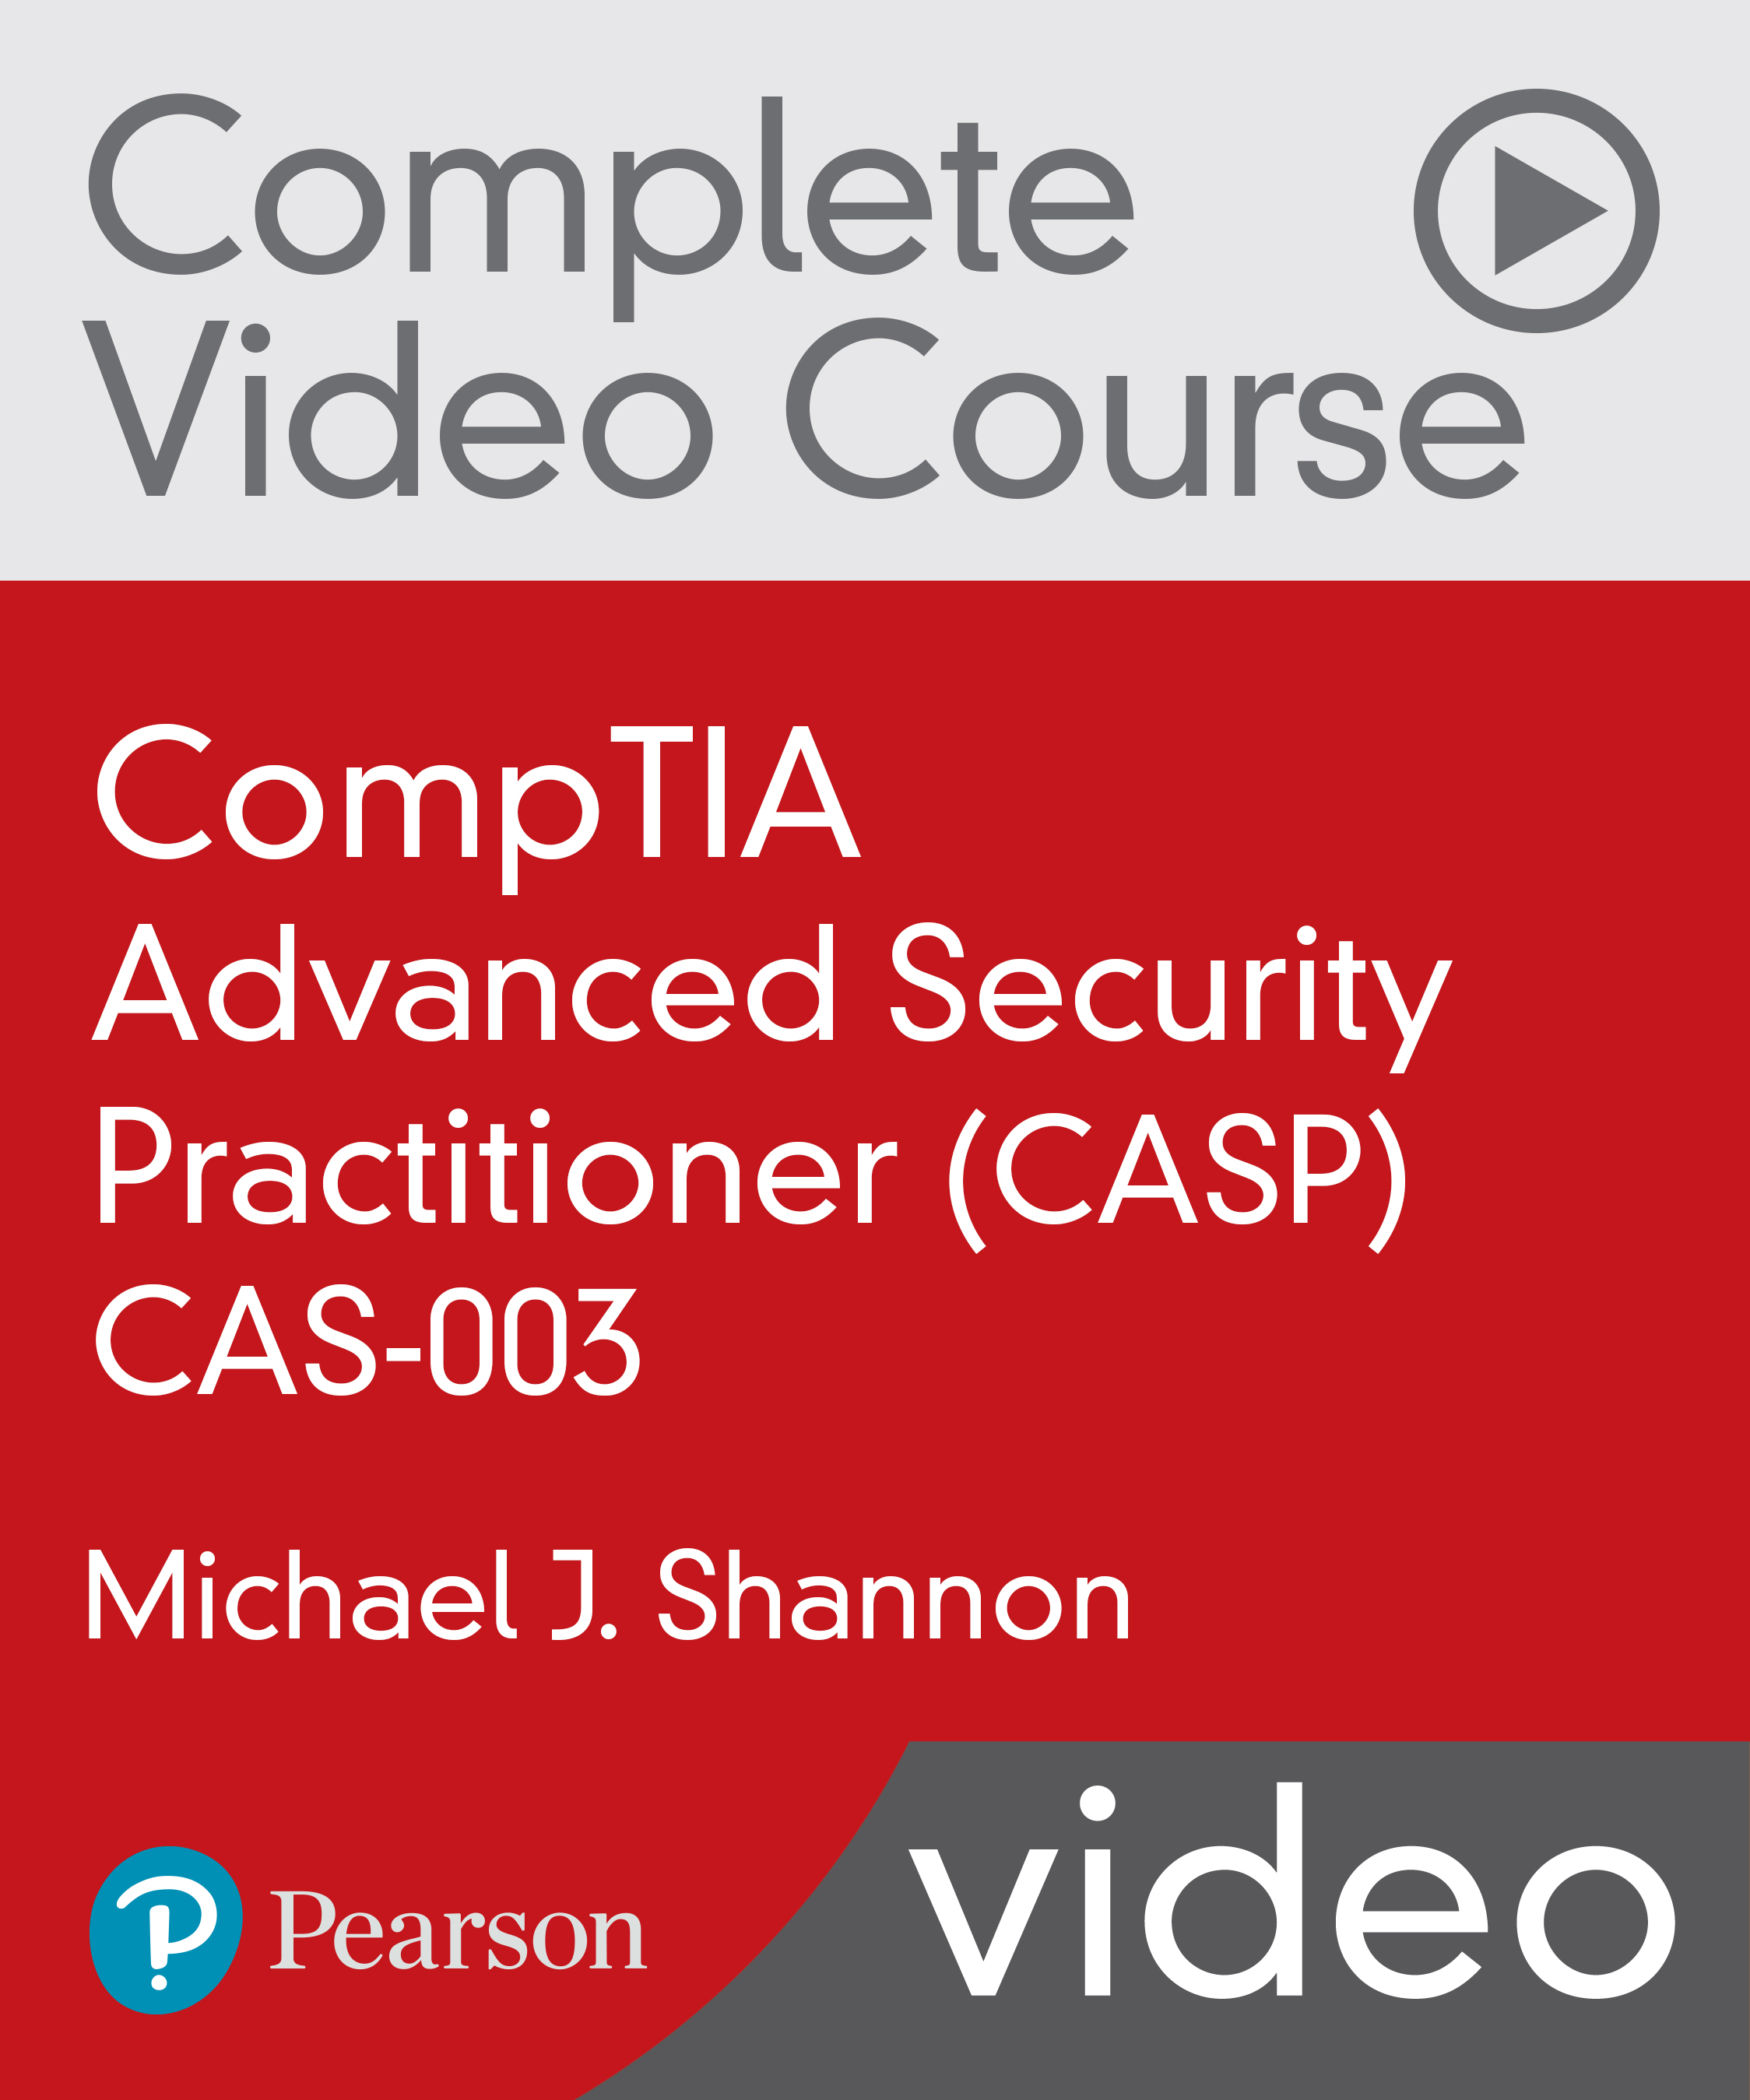 CompTIA Advanced Security Practitioner (CASP) CAS-003 Complete Video Course